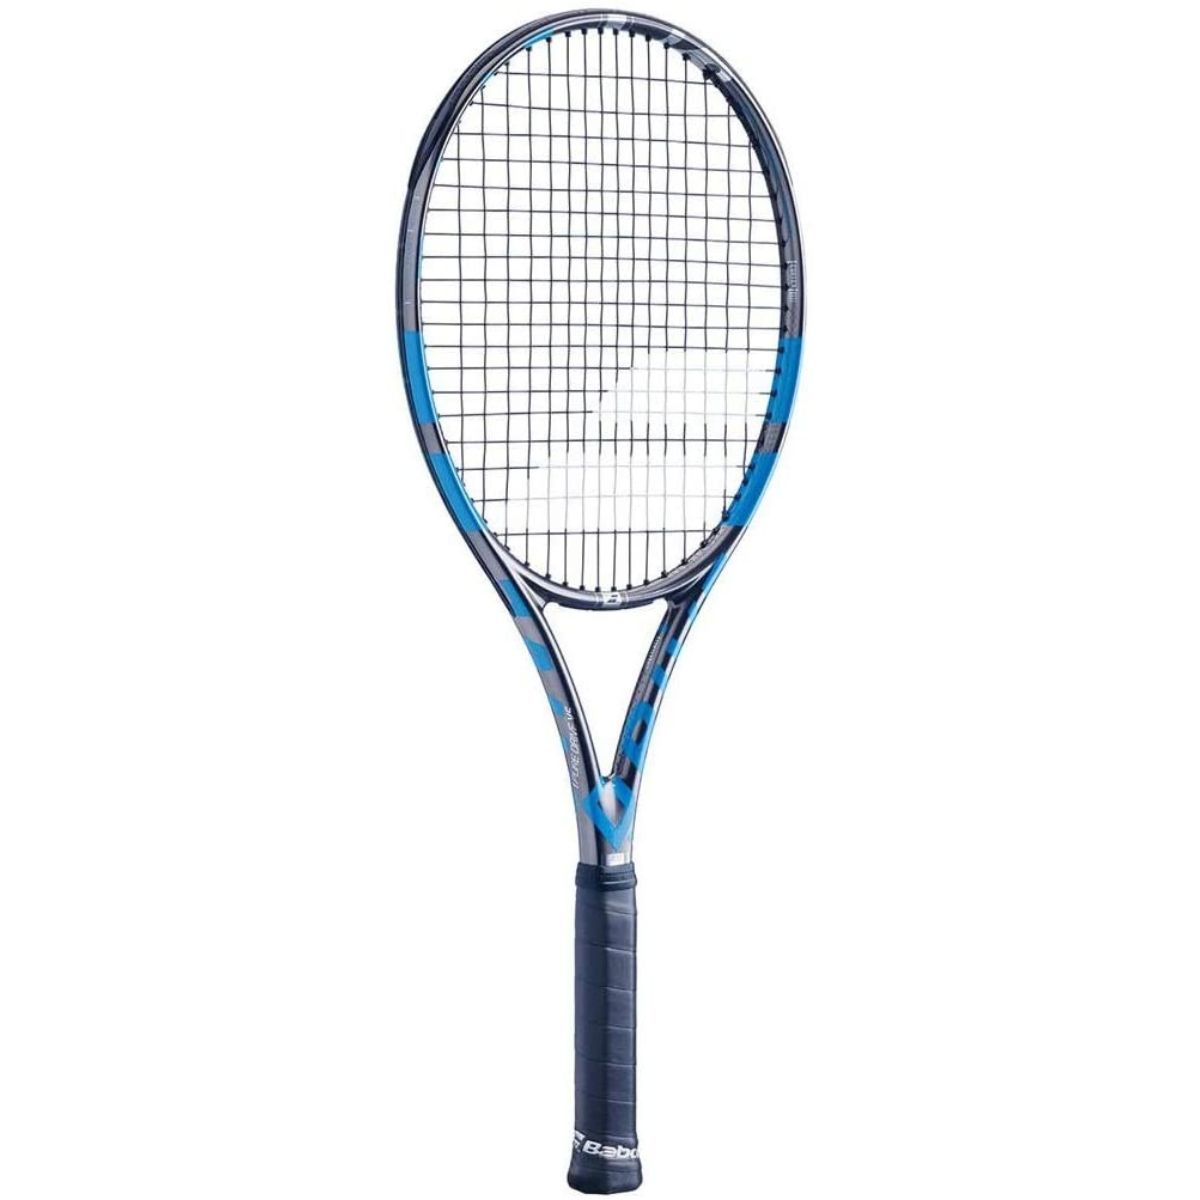 Babolat Pure Strike VS Tennis Racket Review